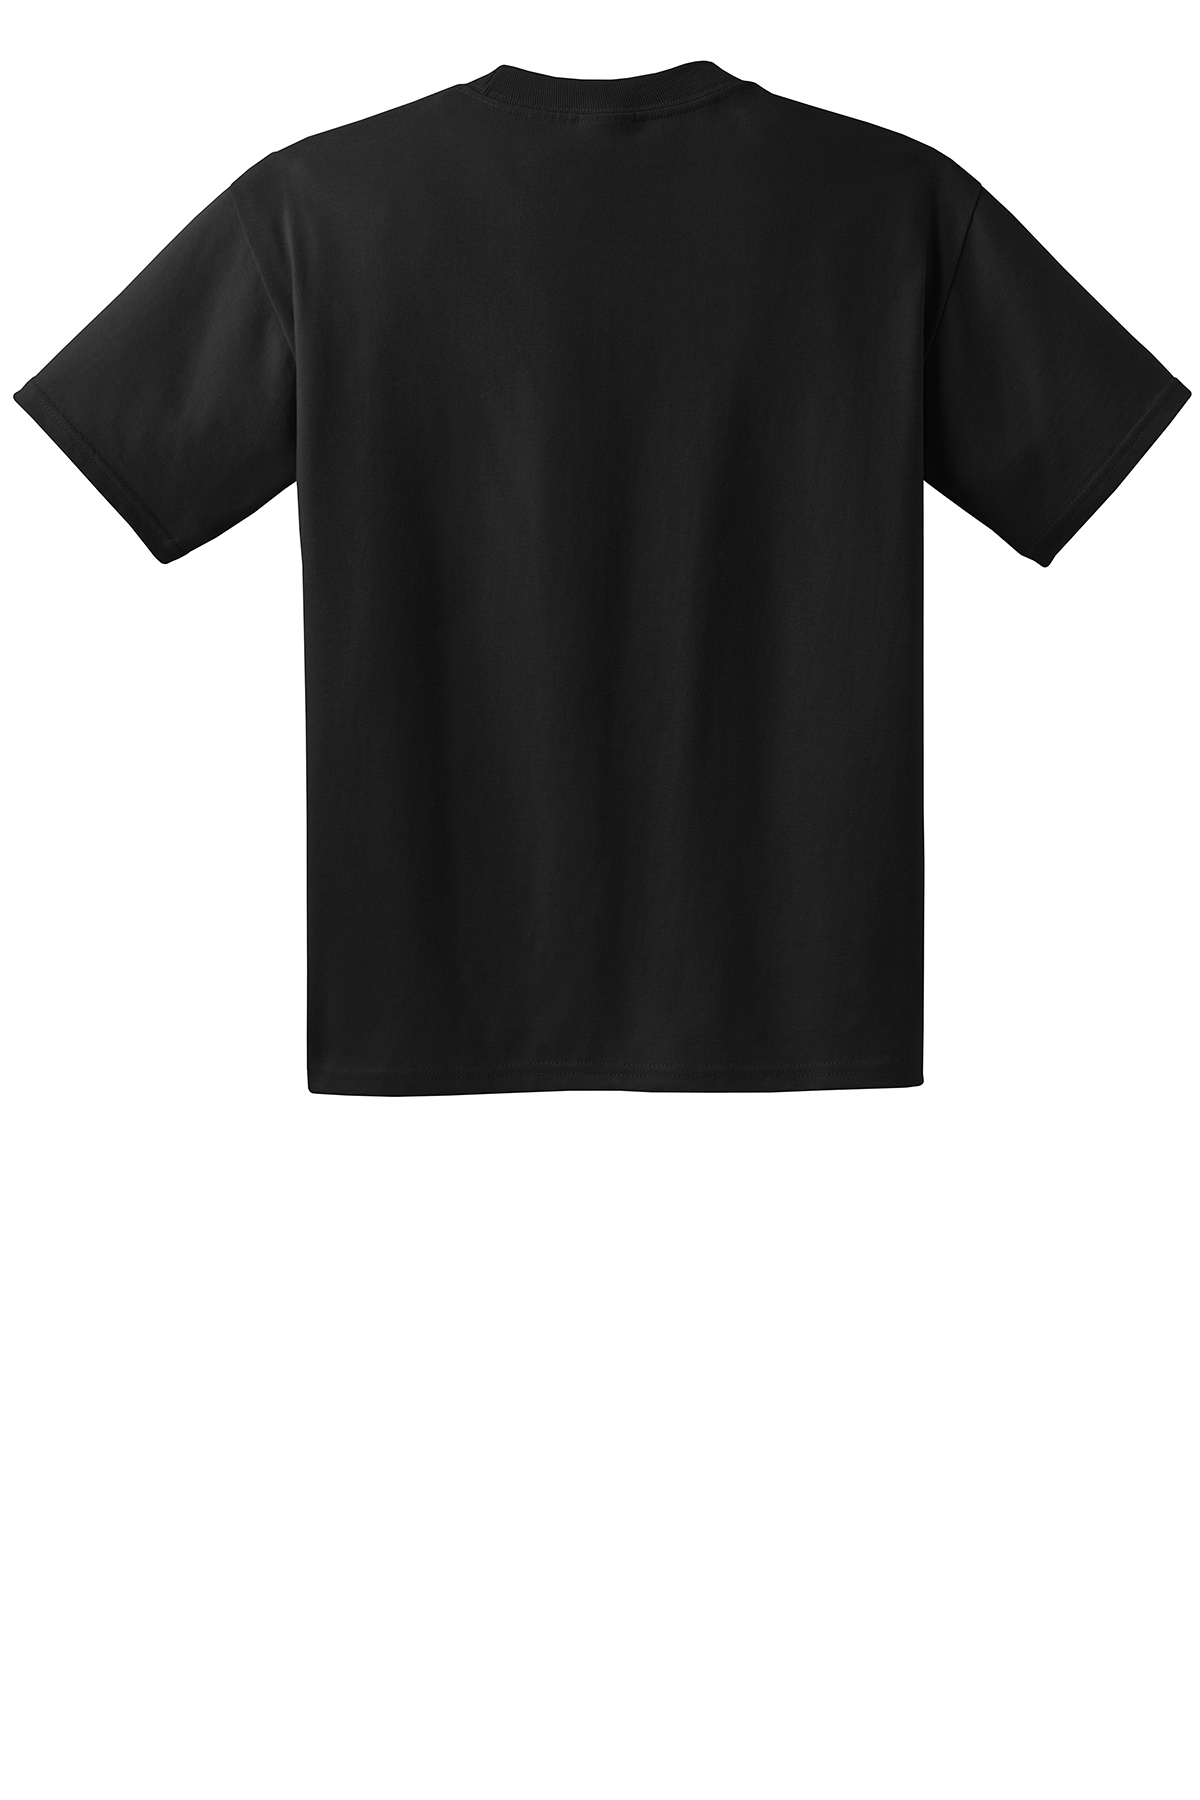 Hanes Beefy-T - T-Shirt Pocket | Product | SanMar